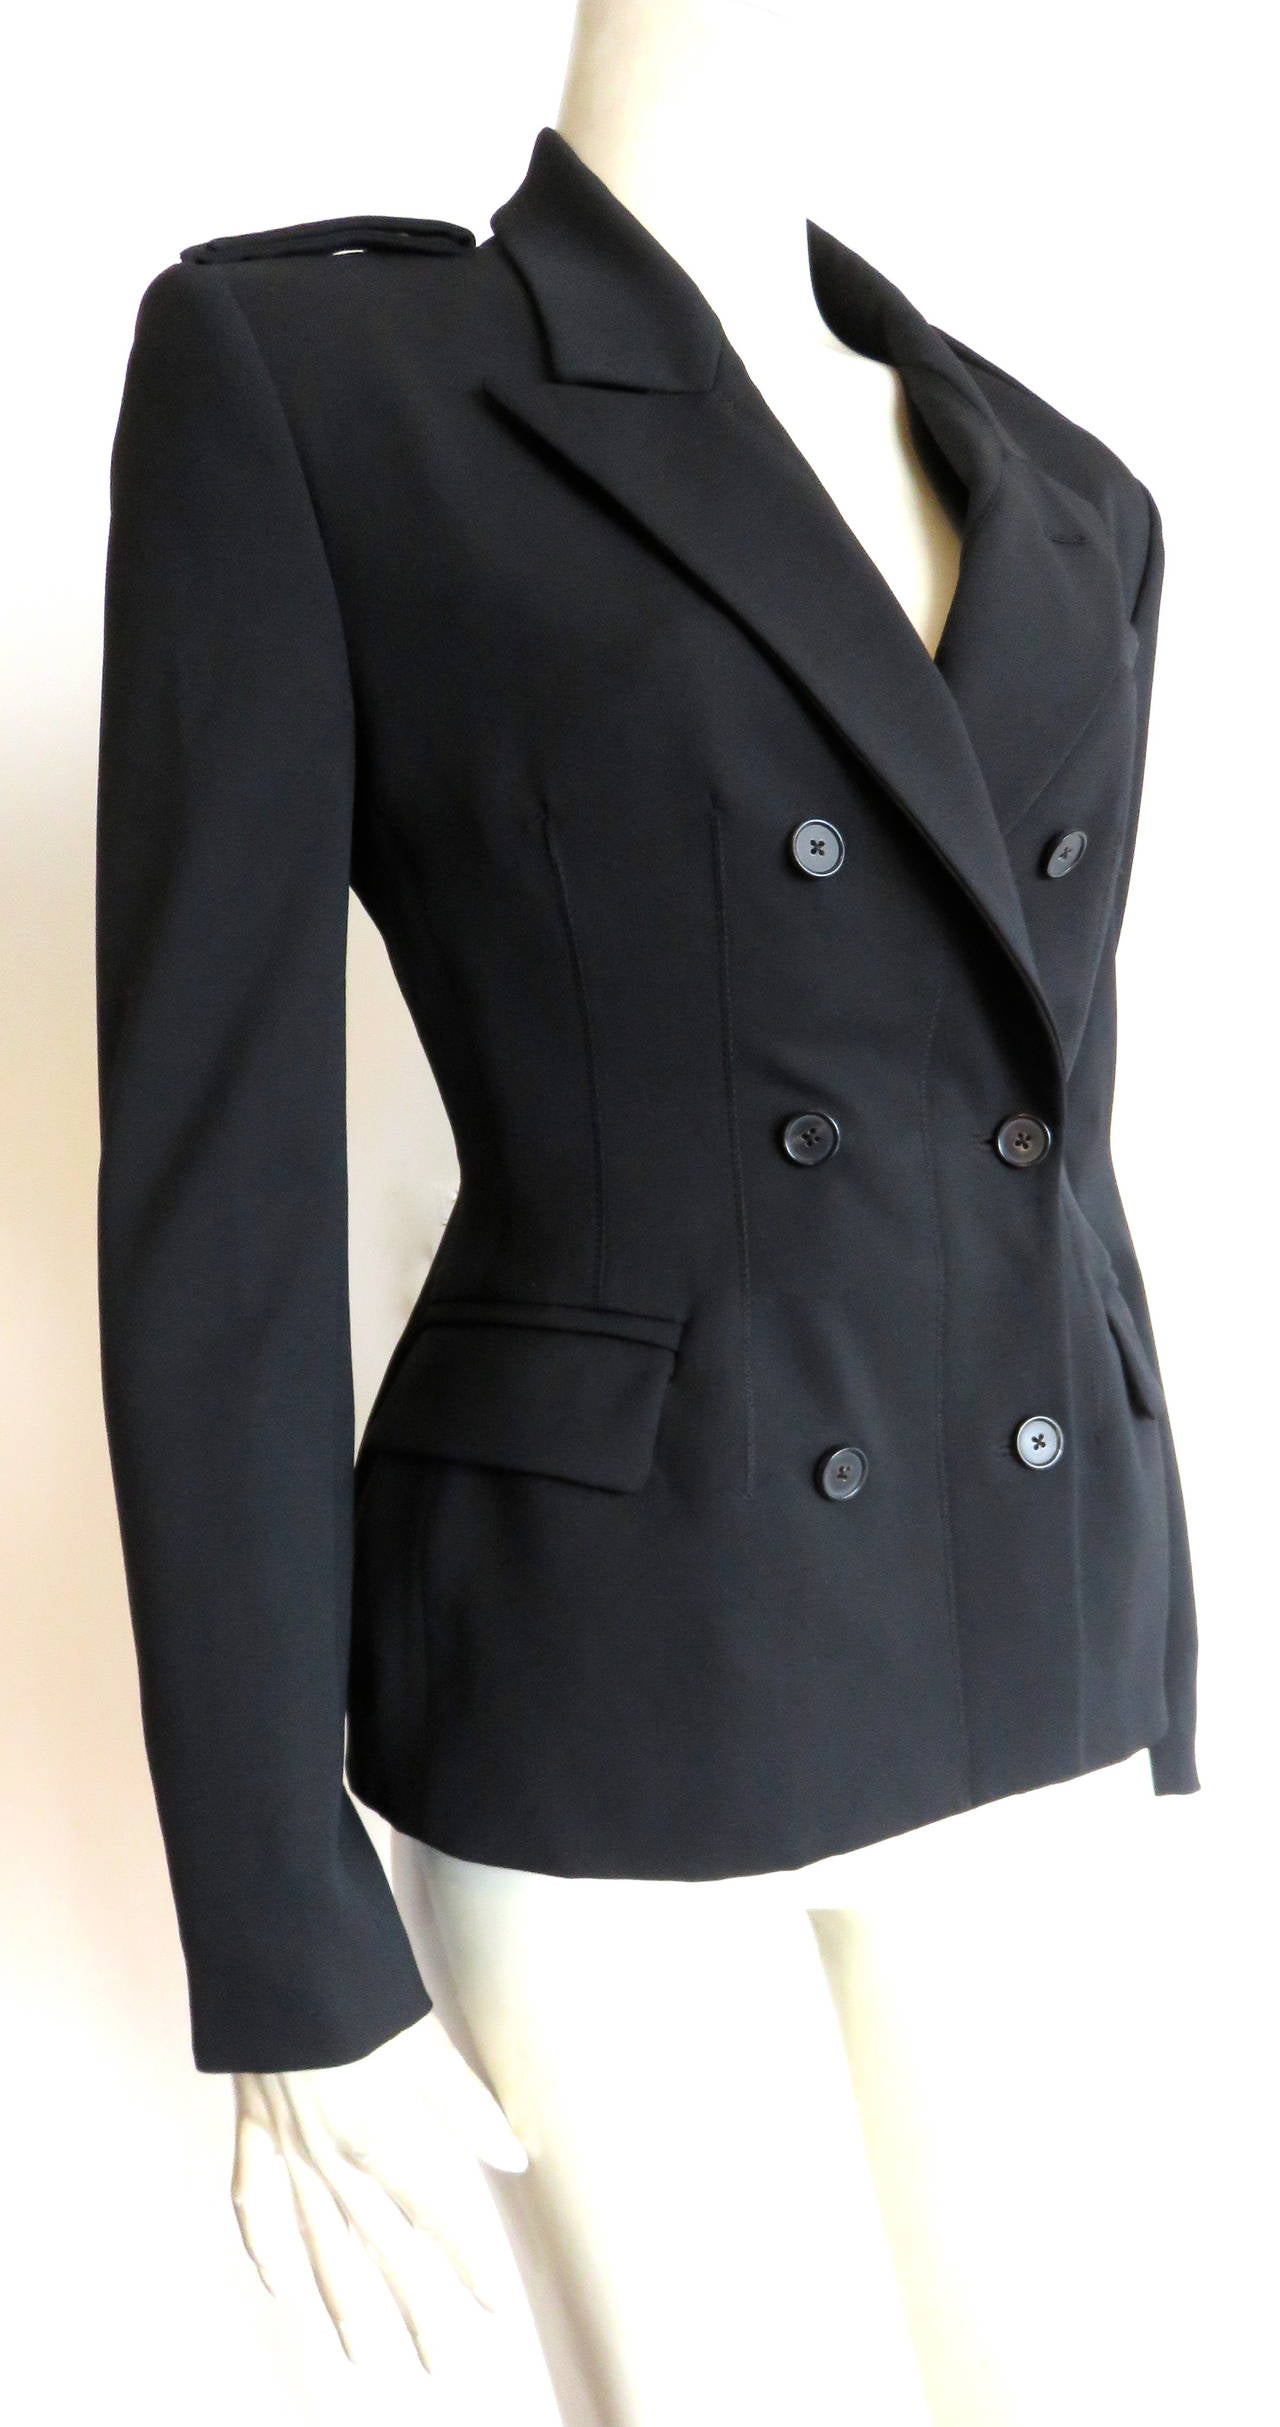 Women's Recent TOM FORD Black lace-up blazer jacket - worn once